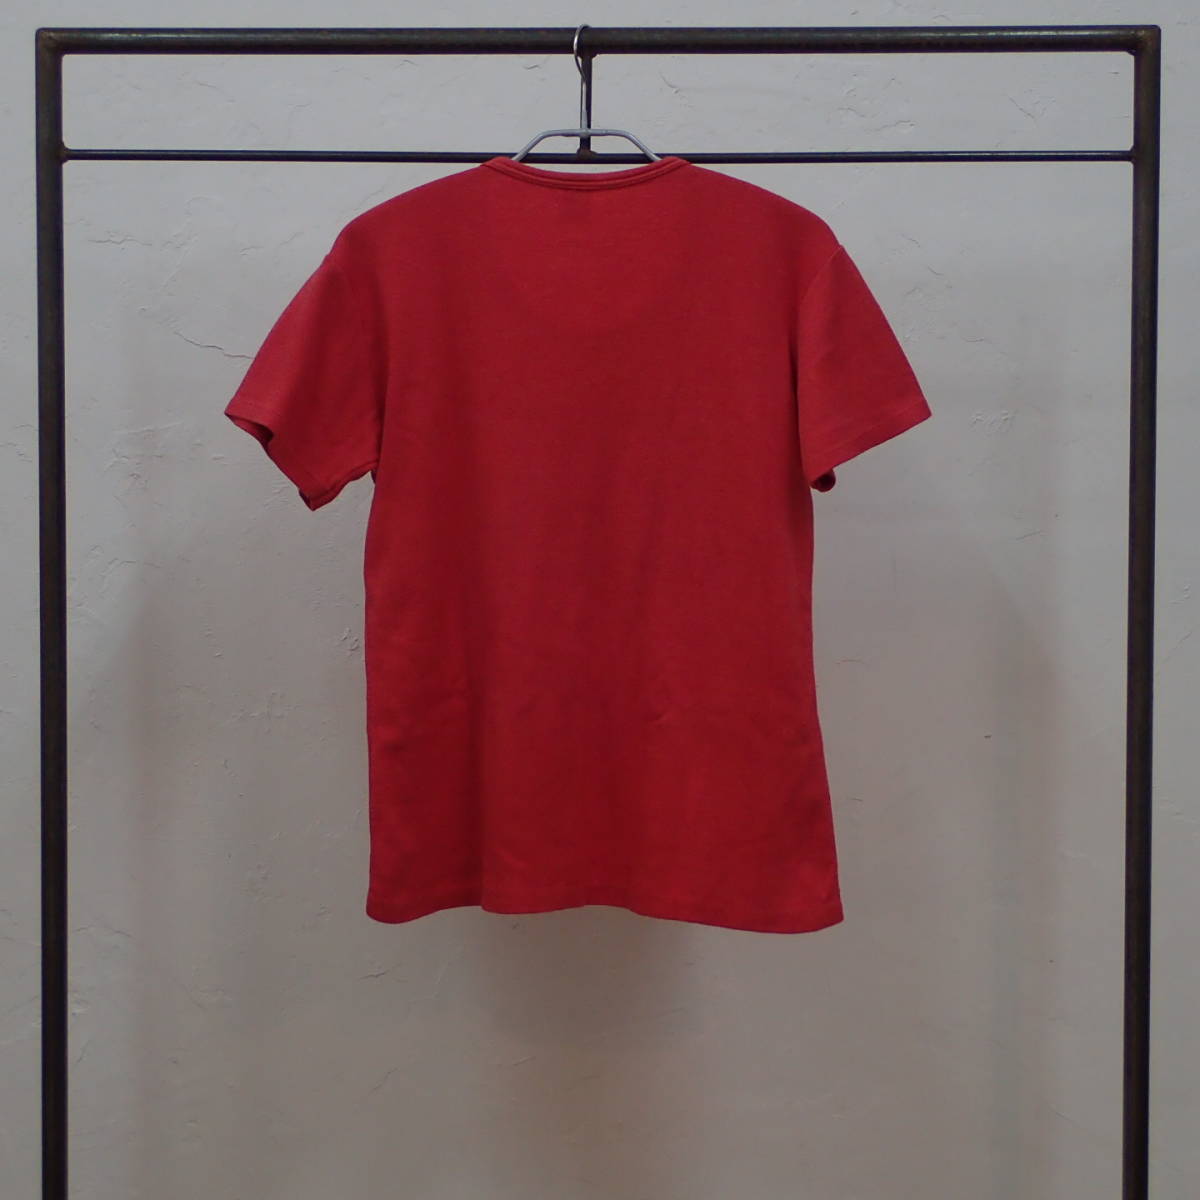 ■ 80s Athletico Spizz 80 Vintage T-shirt ■ アスレティコスピッツ80 ヴィンテージ Tシャツ 当時物 本物 バンドT ロックT spizzenergi